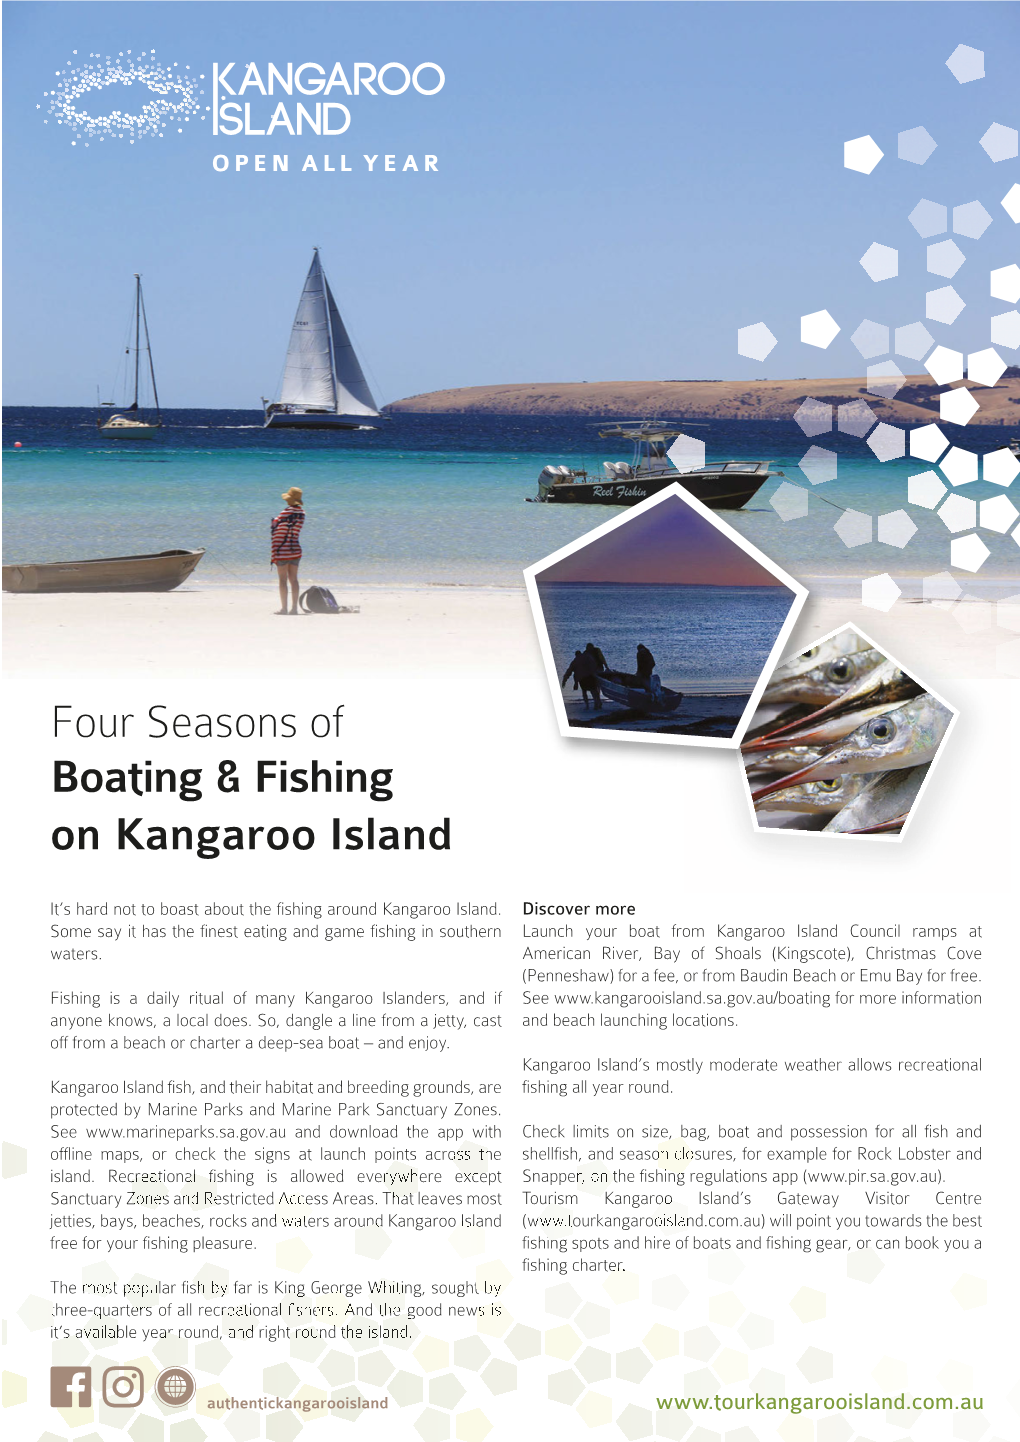 Boating & Fishing Four Seasons on Kangaroo Island